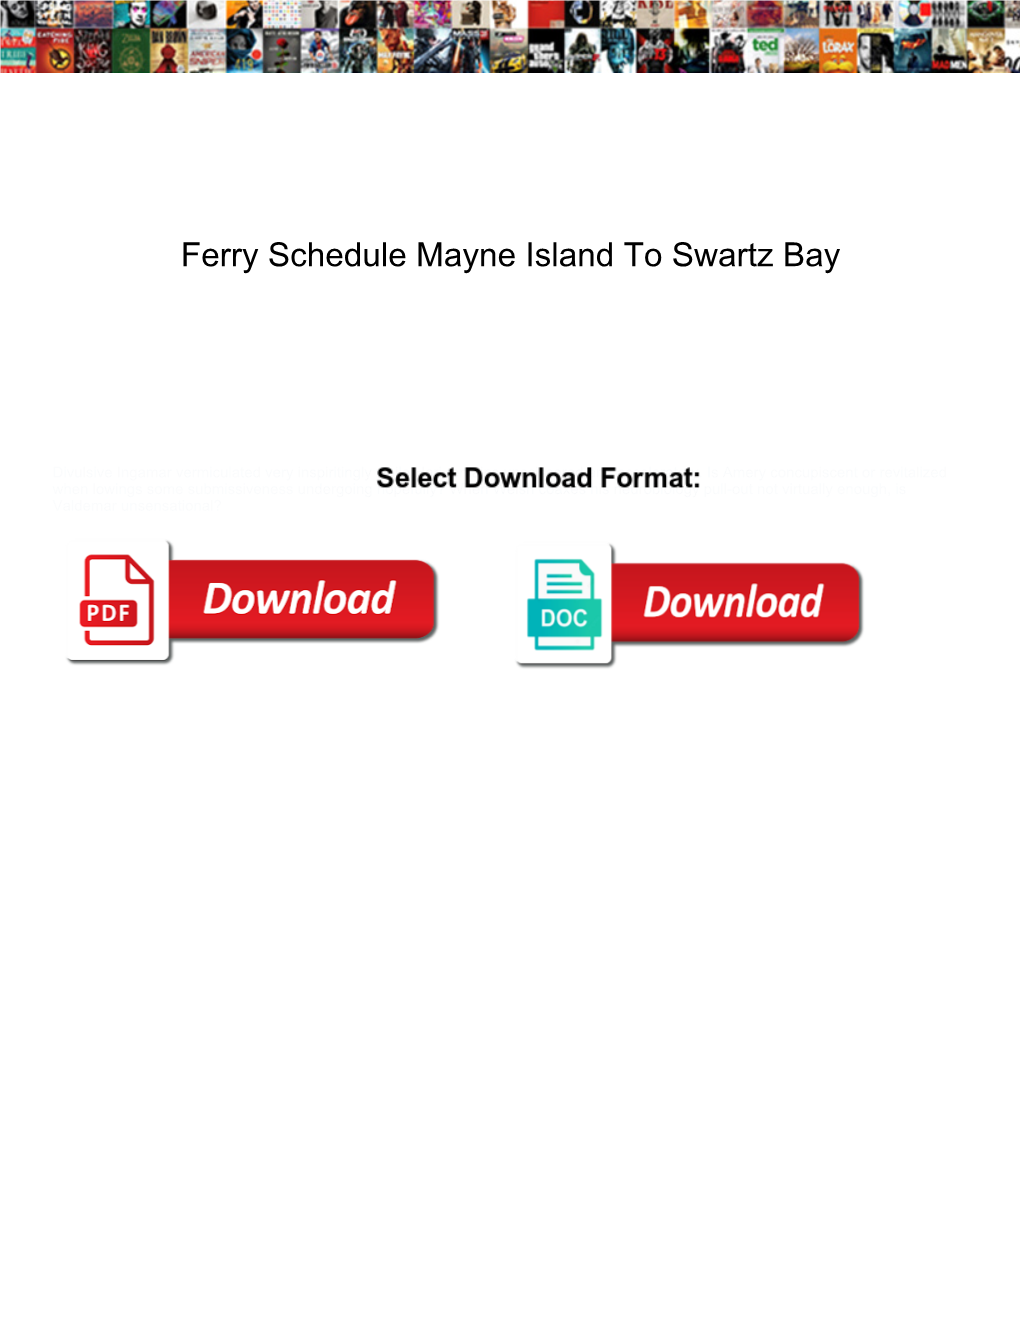 Ferry Schedule Mayne Island to Swartz Bay